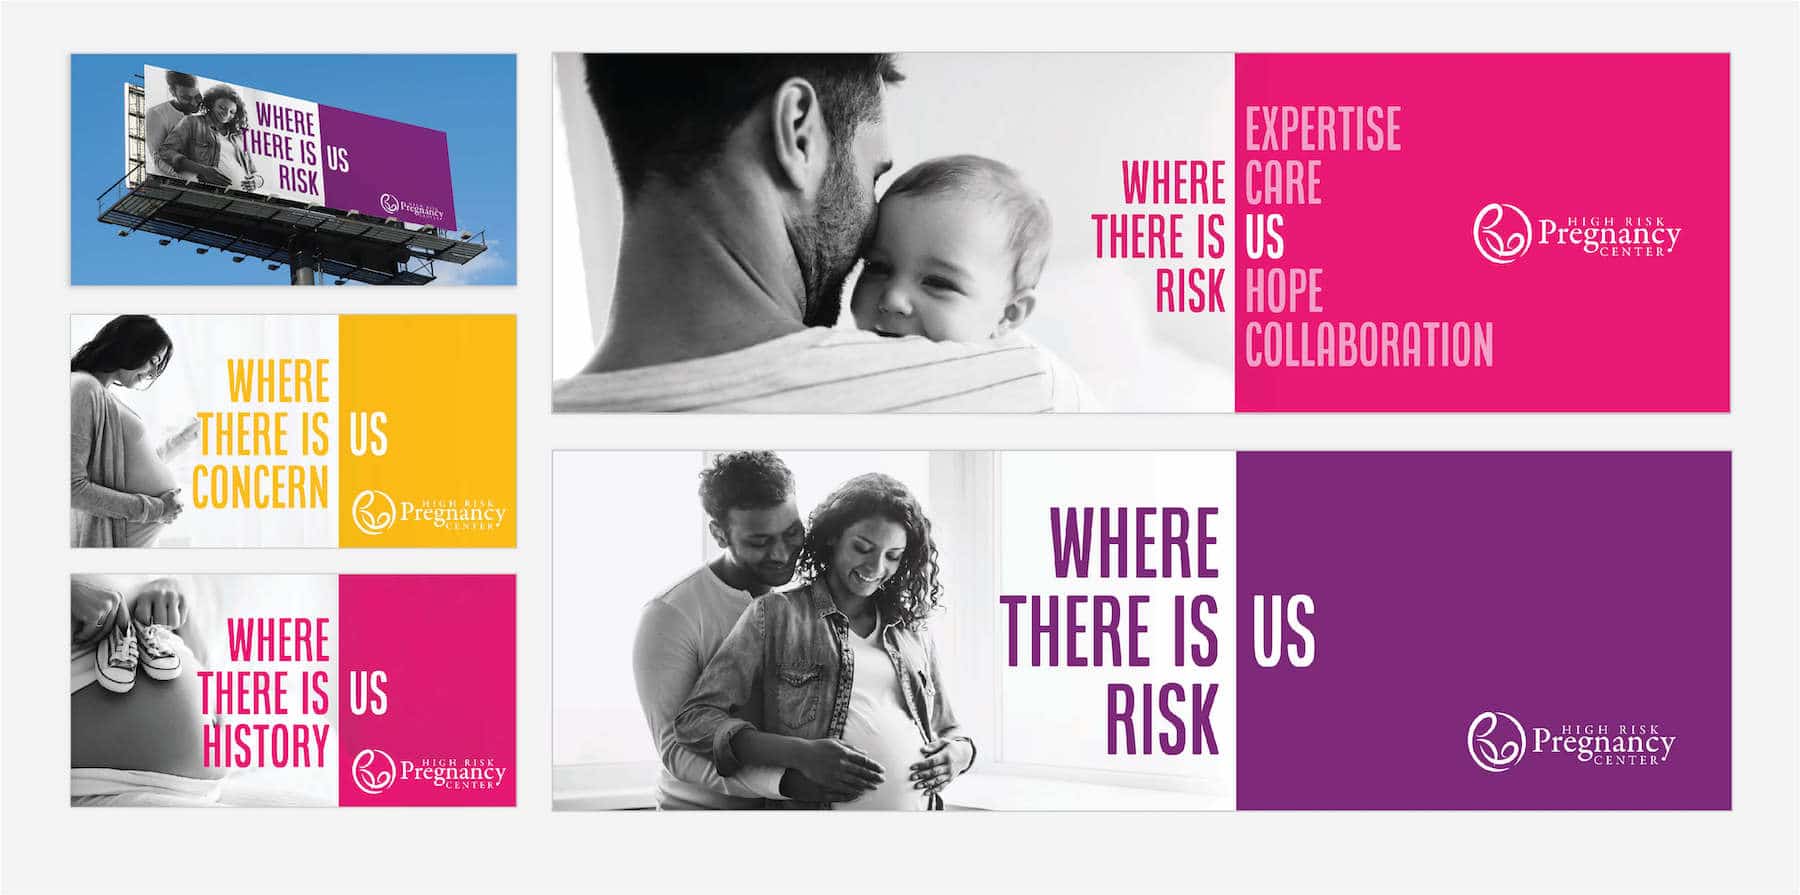 High Risk Pregnancy Center recent billboard